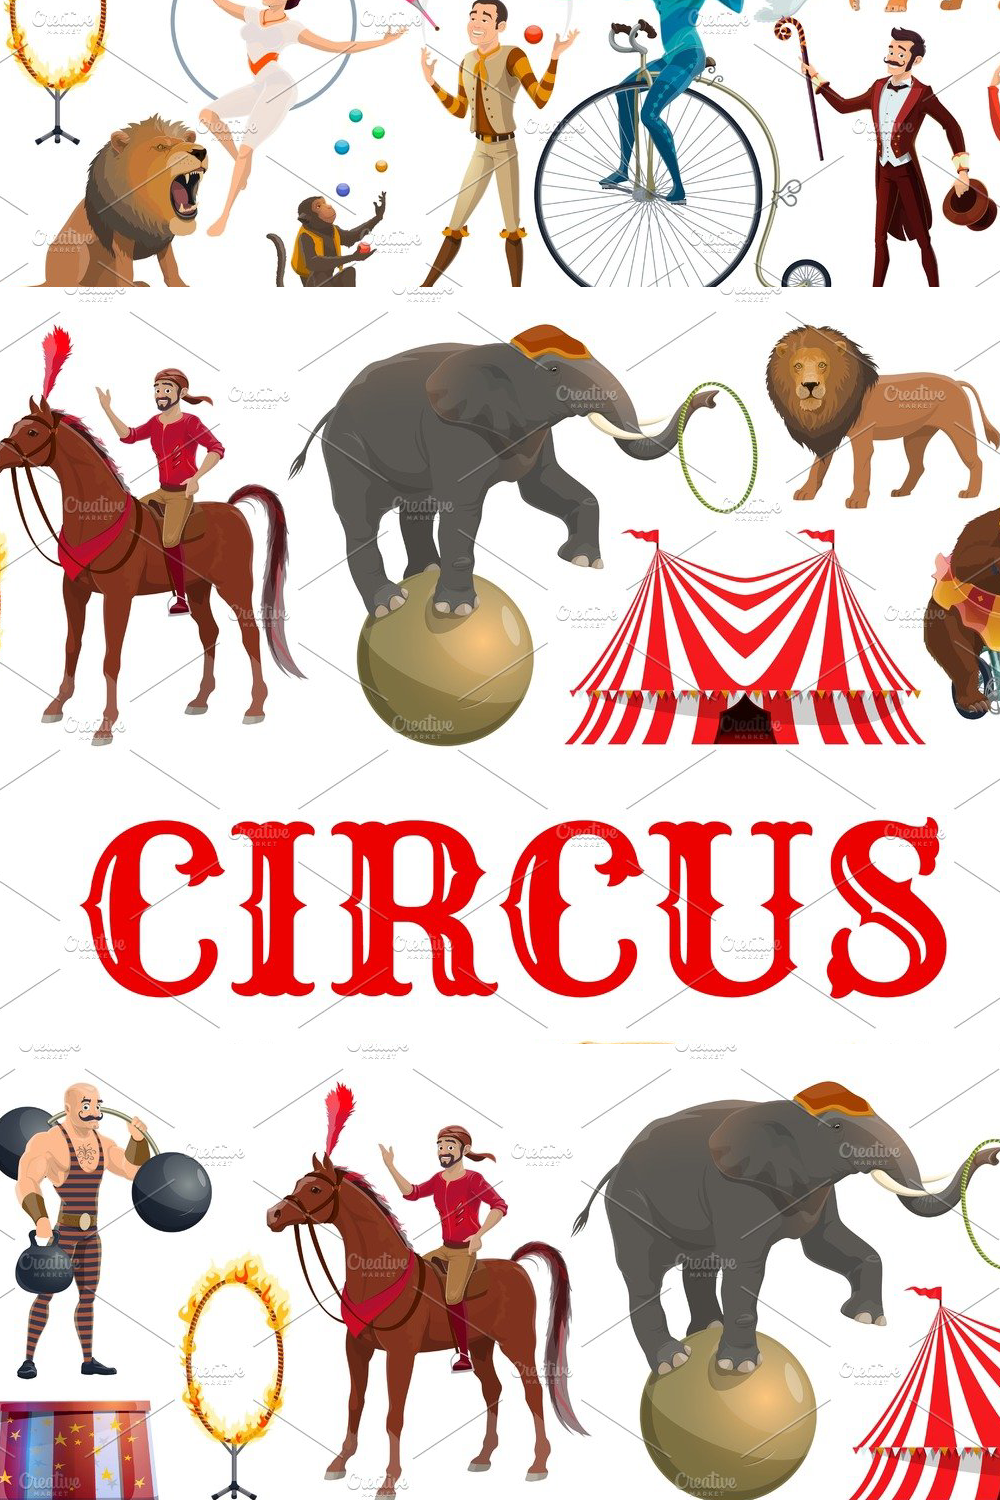 circus animals clowns equilibrists pinterest 79